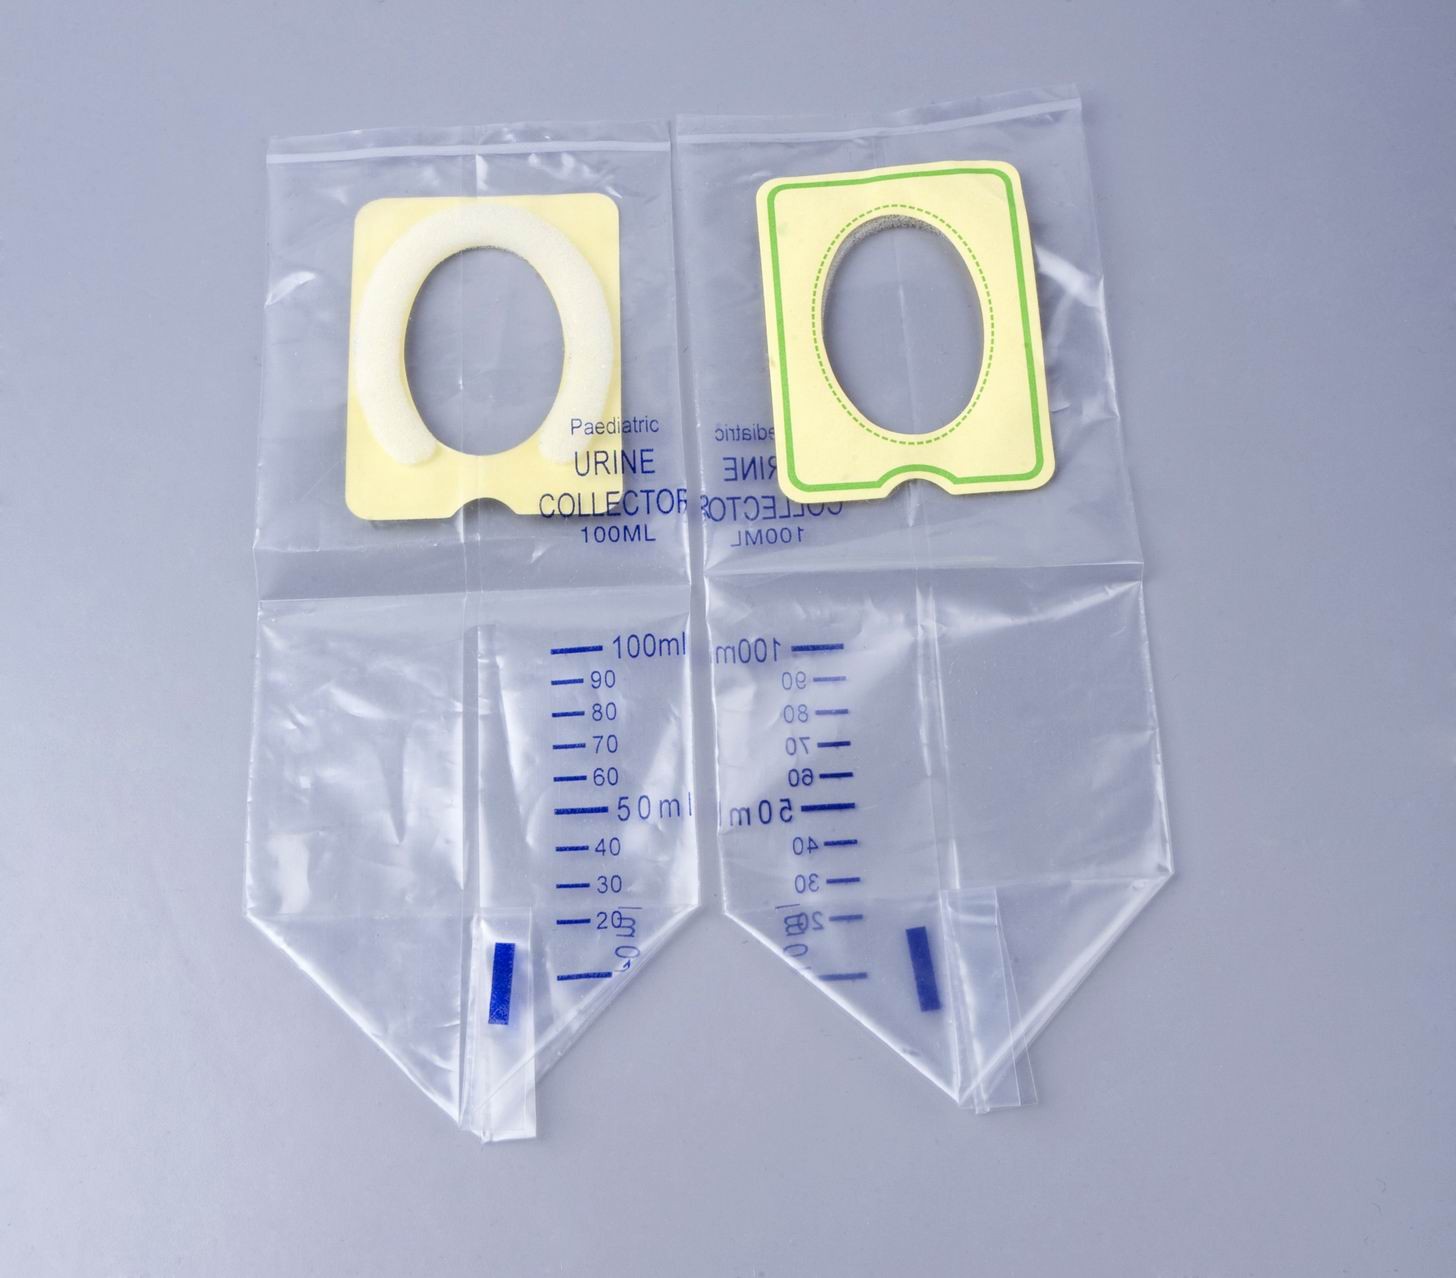 Paediatric urine collector urine bag